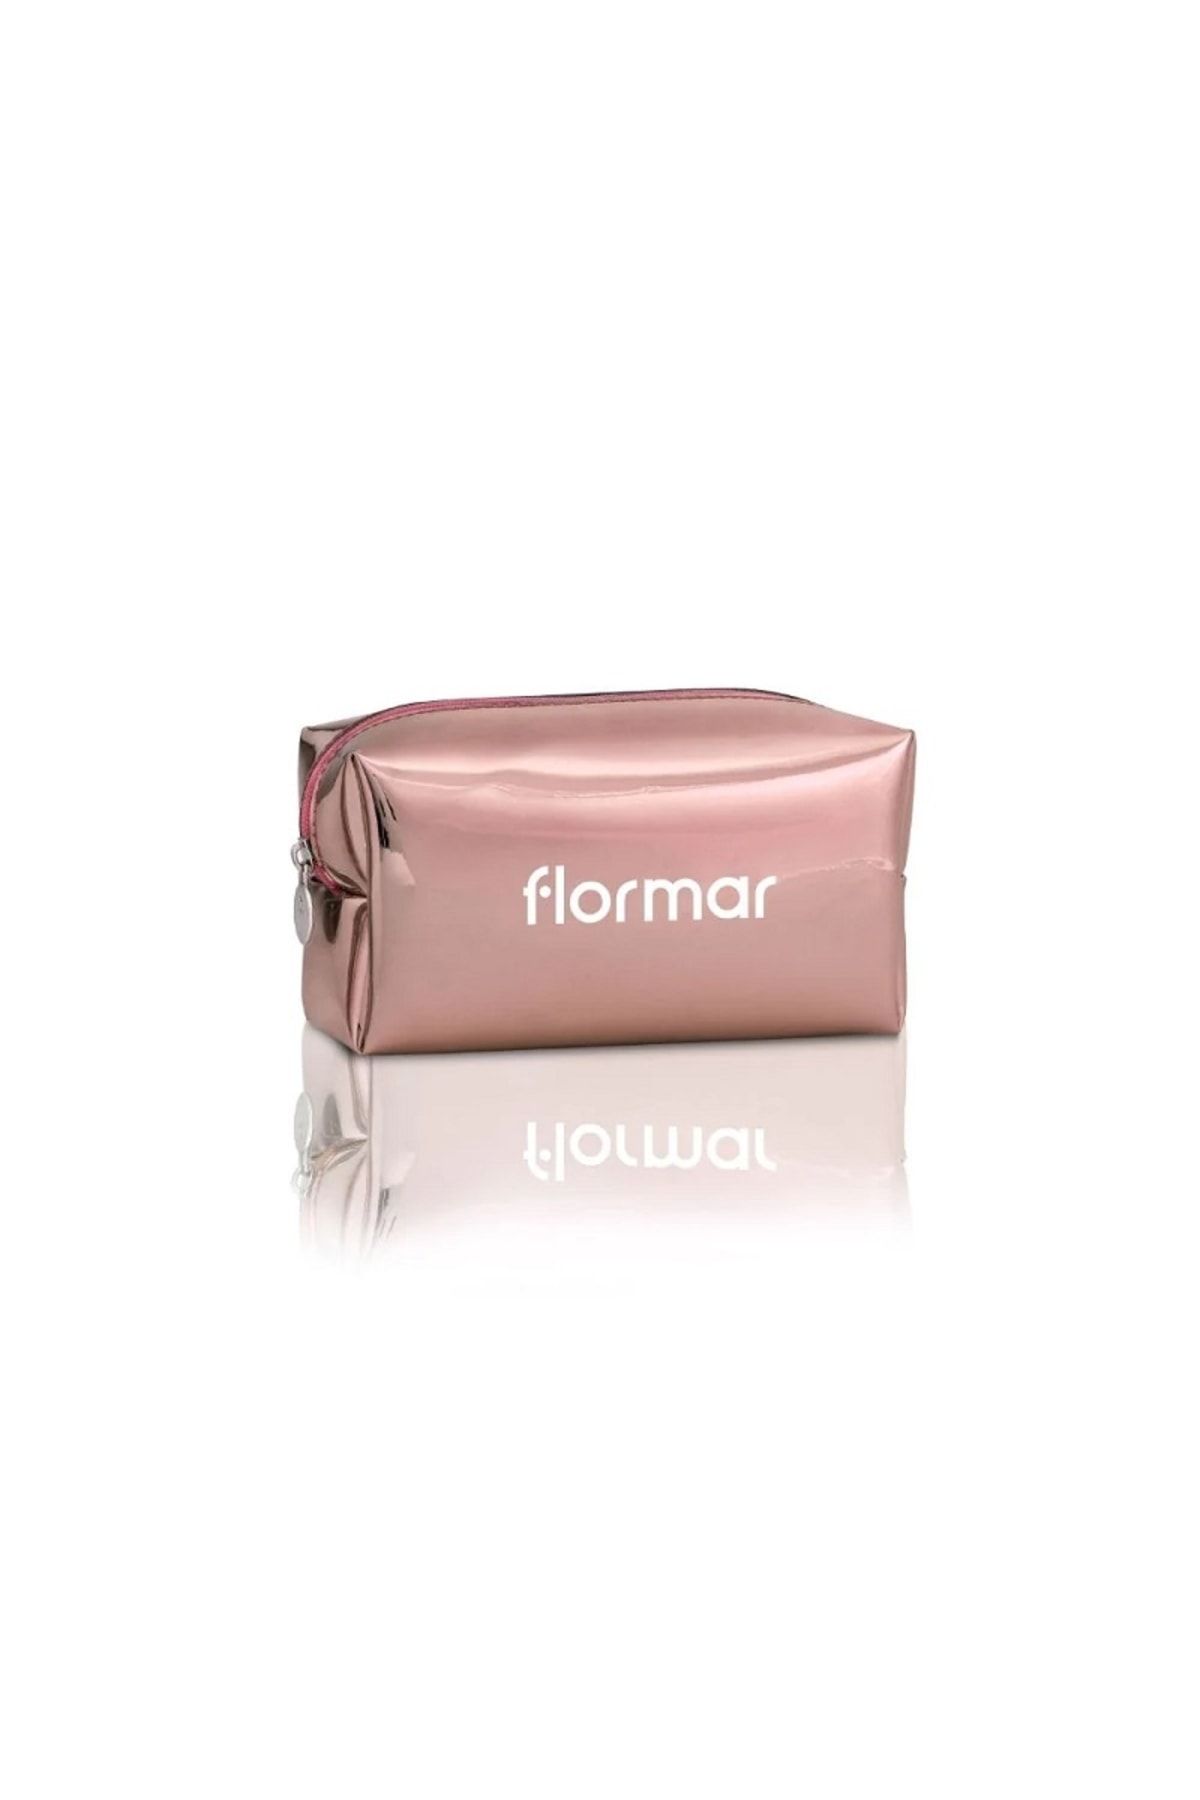 Flormar Pembe Holografik Makyaj Çantası